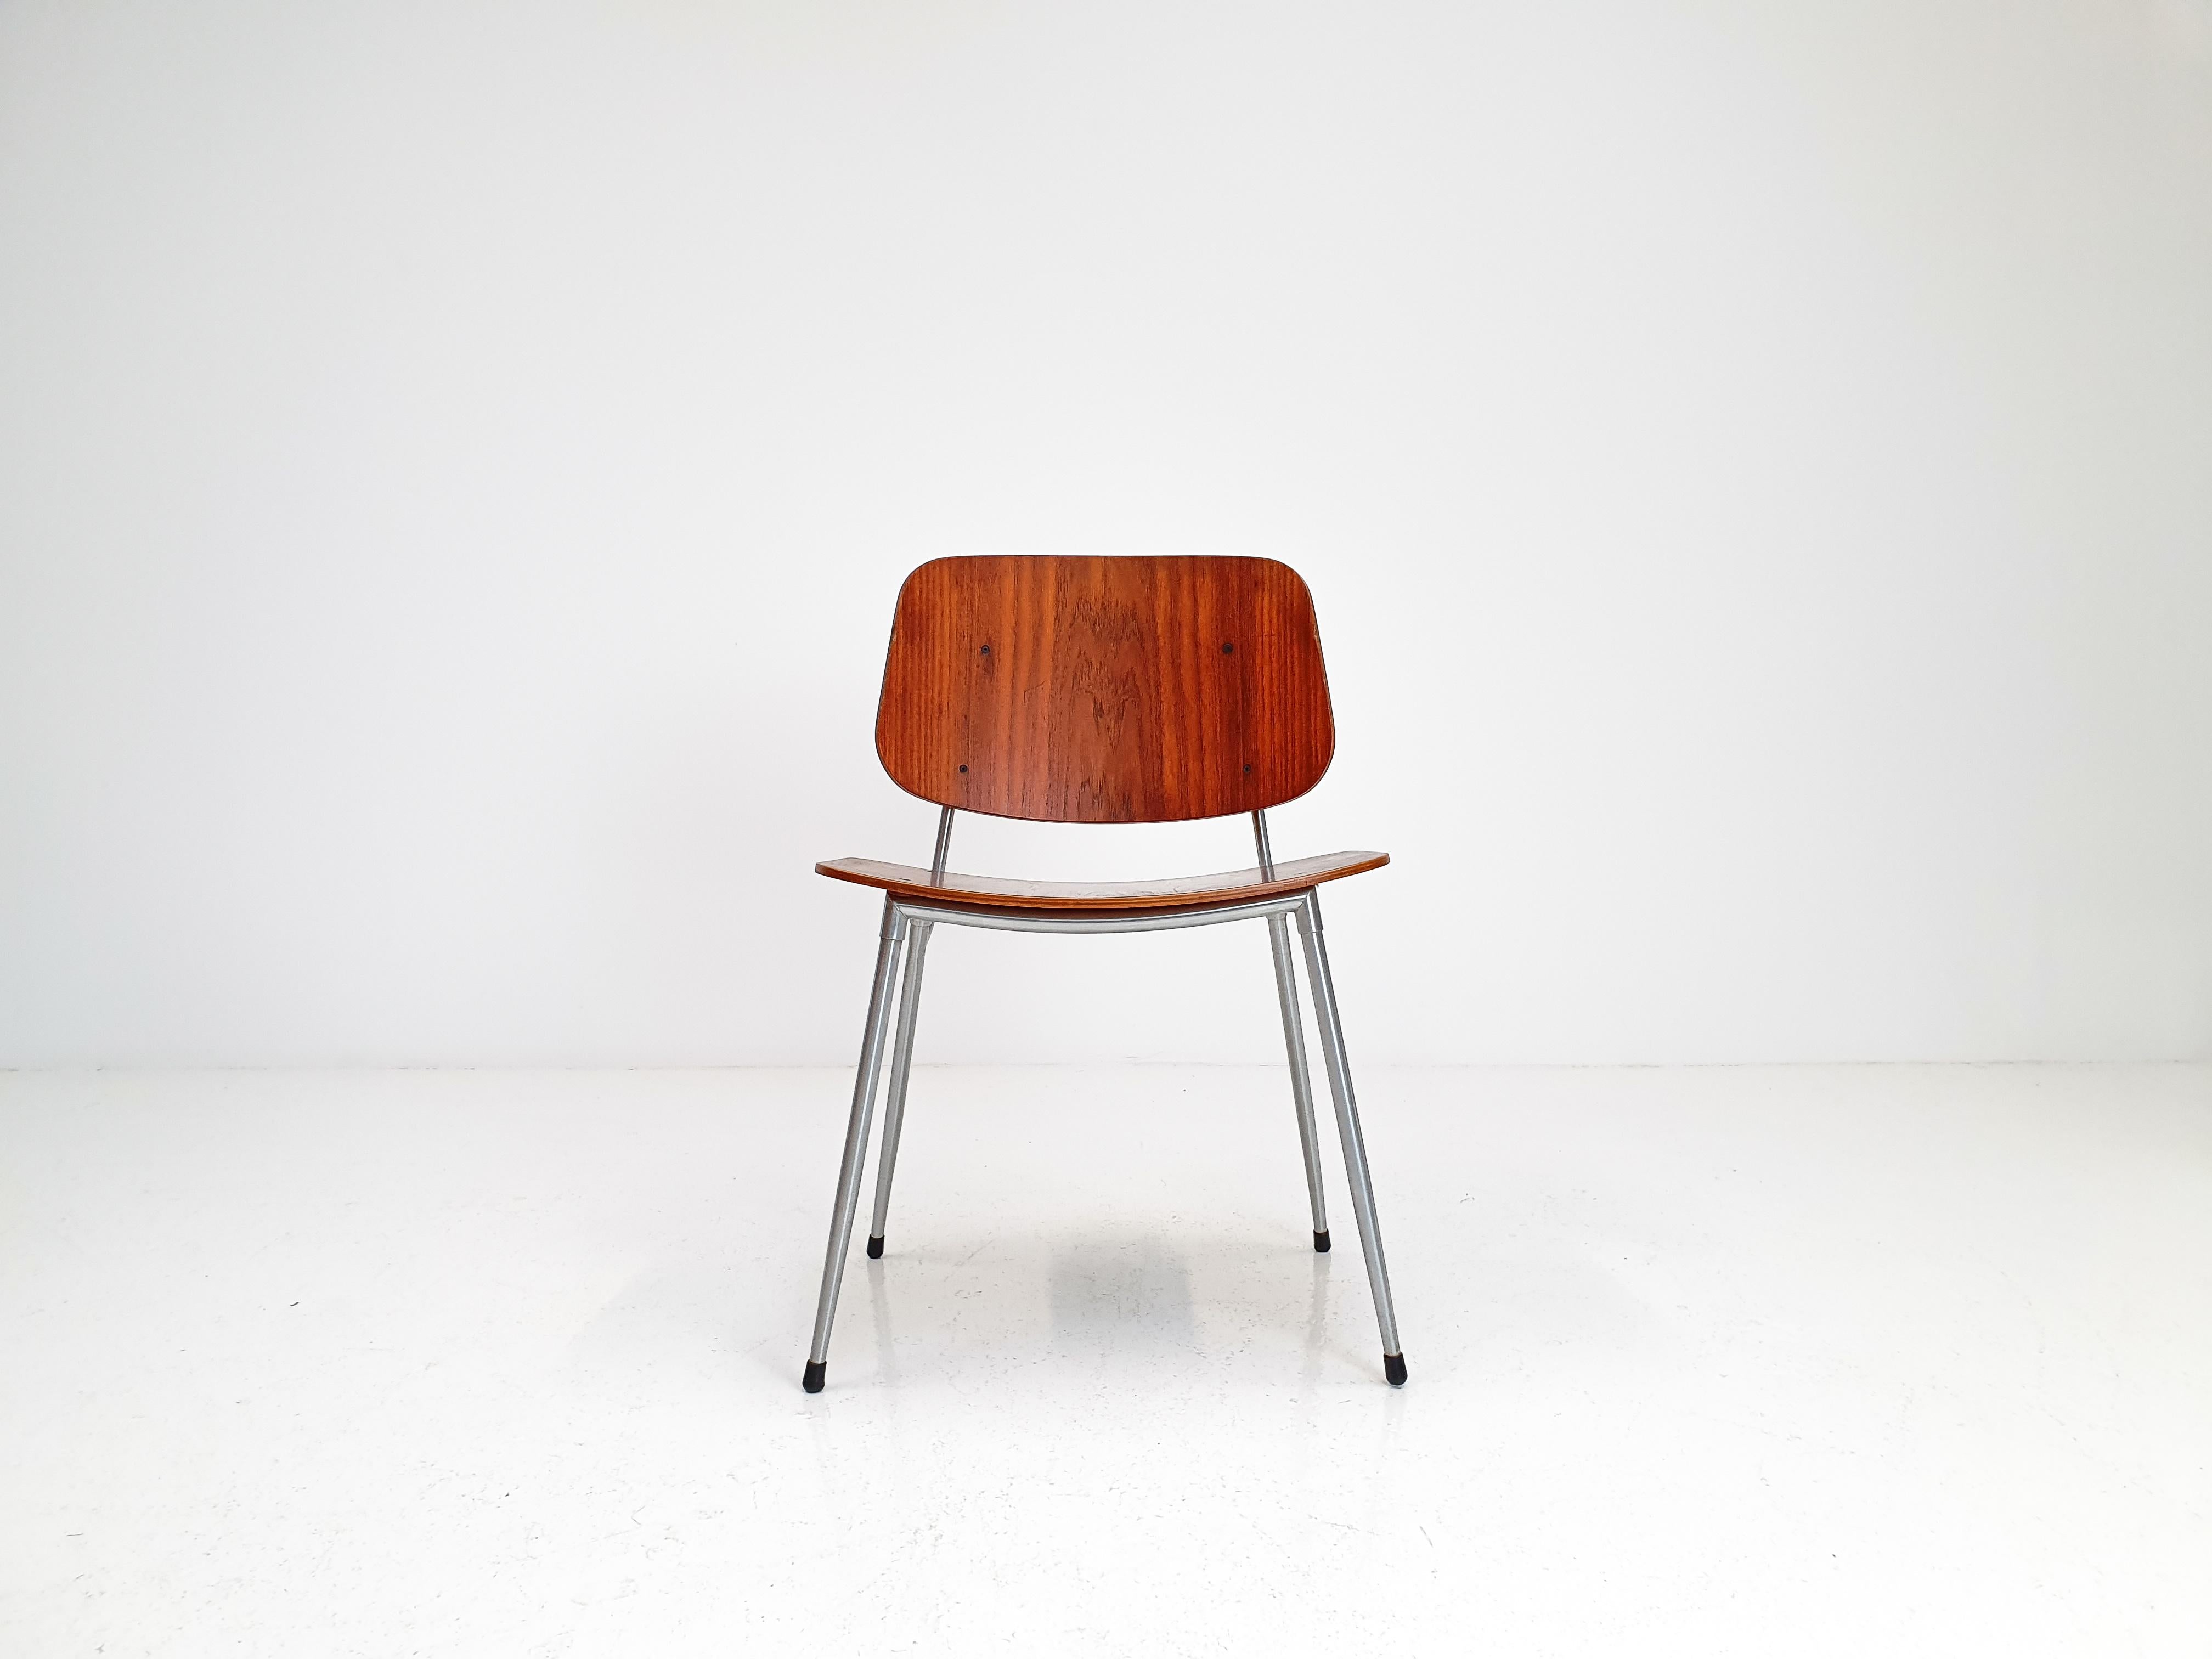 Mid-Century Modern Plywood and Steel Chair by Børge Mogensen, Søborg Møbelfabrik, Denmark, 1953